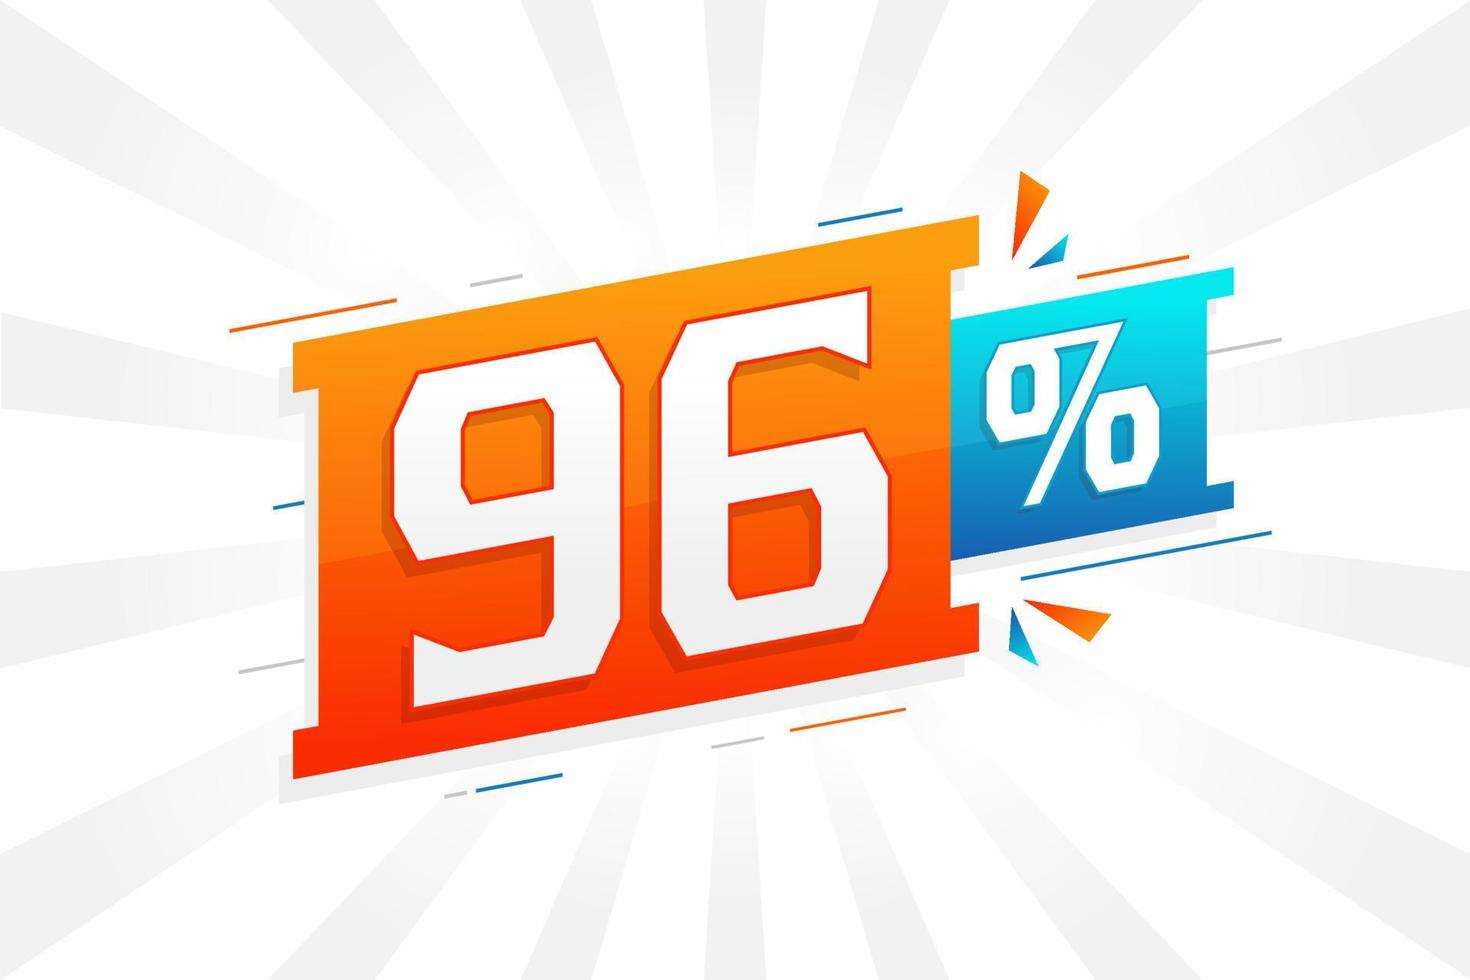 96 discount marketing banner promotion. 96 percent sales promotional design. vector